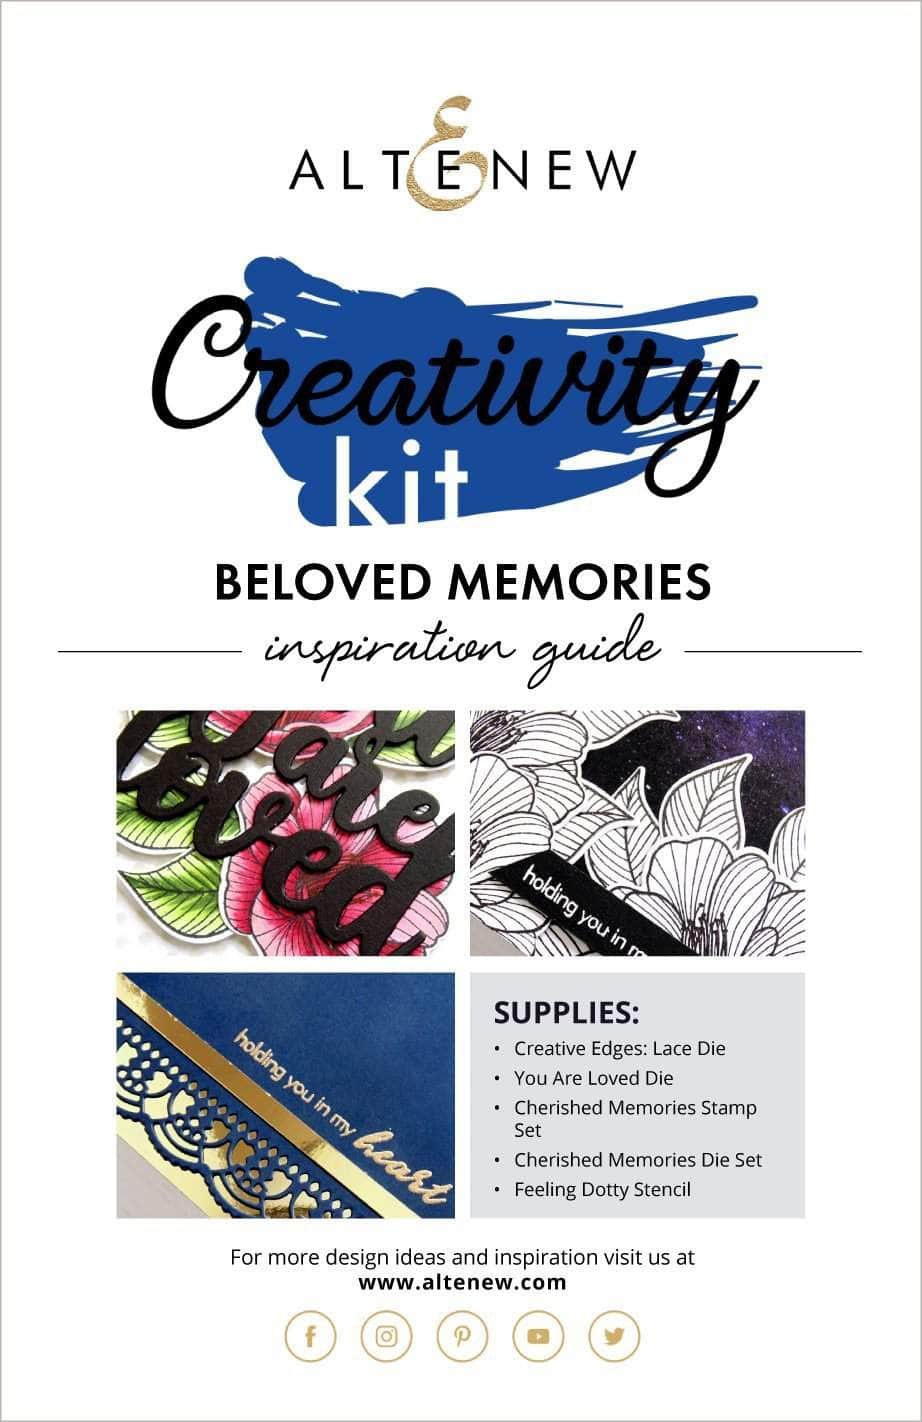 Printed Media Beloved Memories Creativity Kit Inspiration Guide